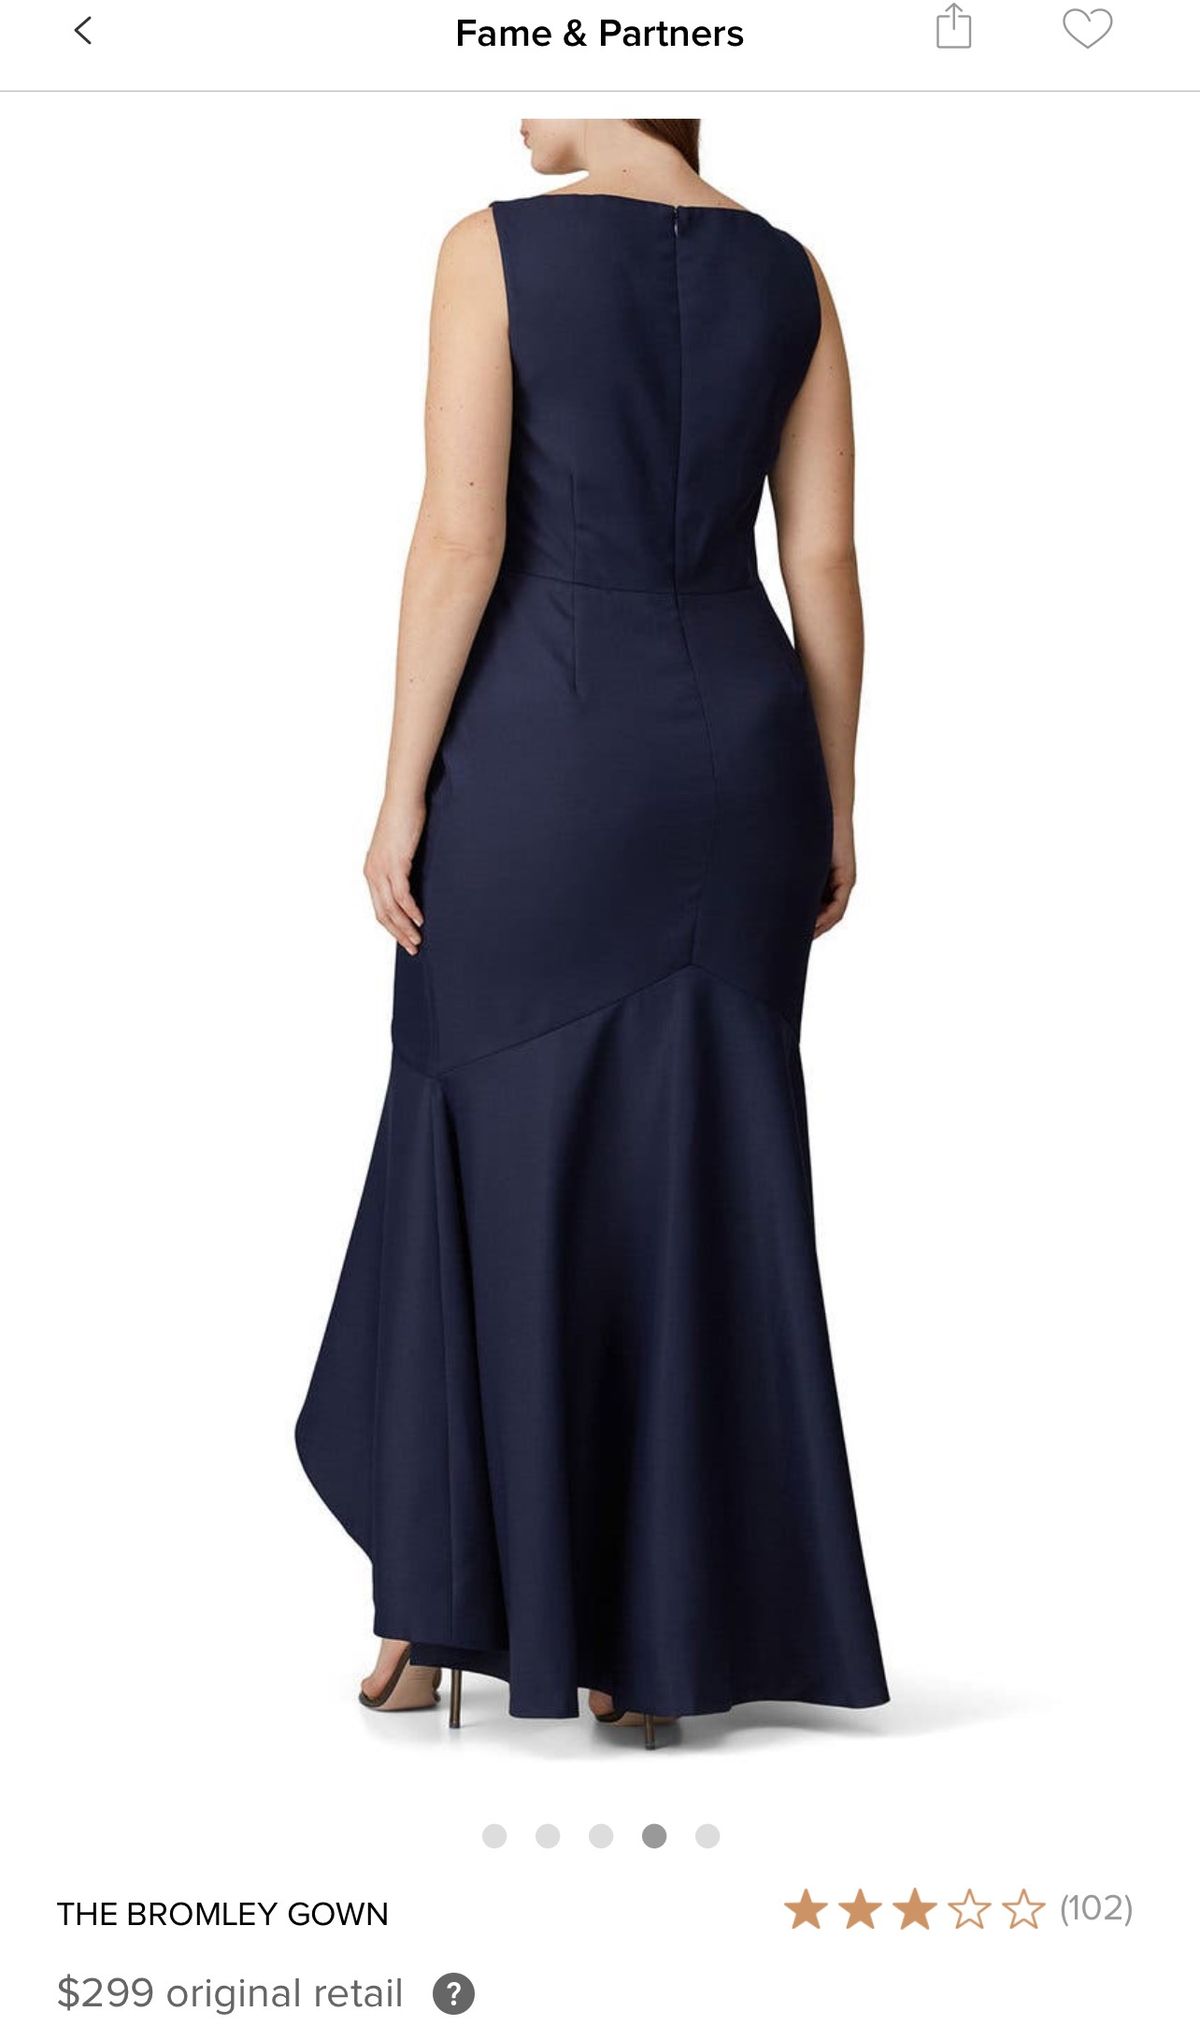 Fame & Partners Plus Size 18 Wedding Guest Blue Side Slit Dress on Queenly